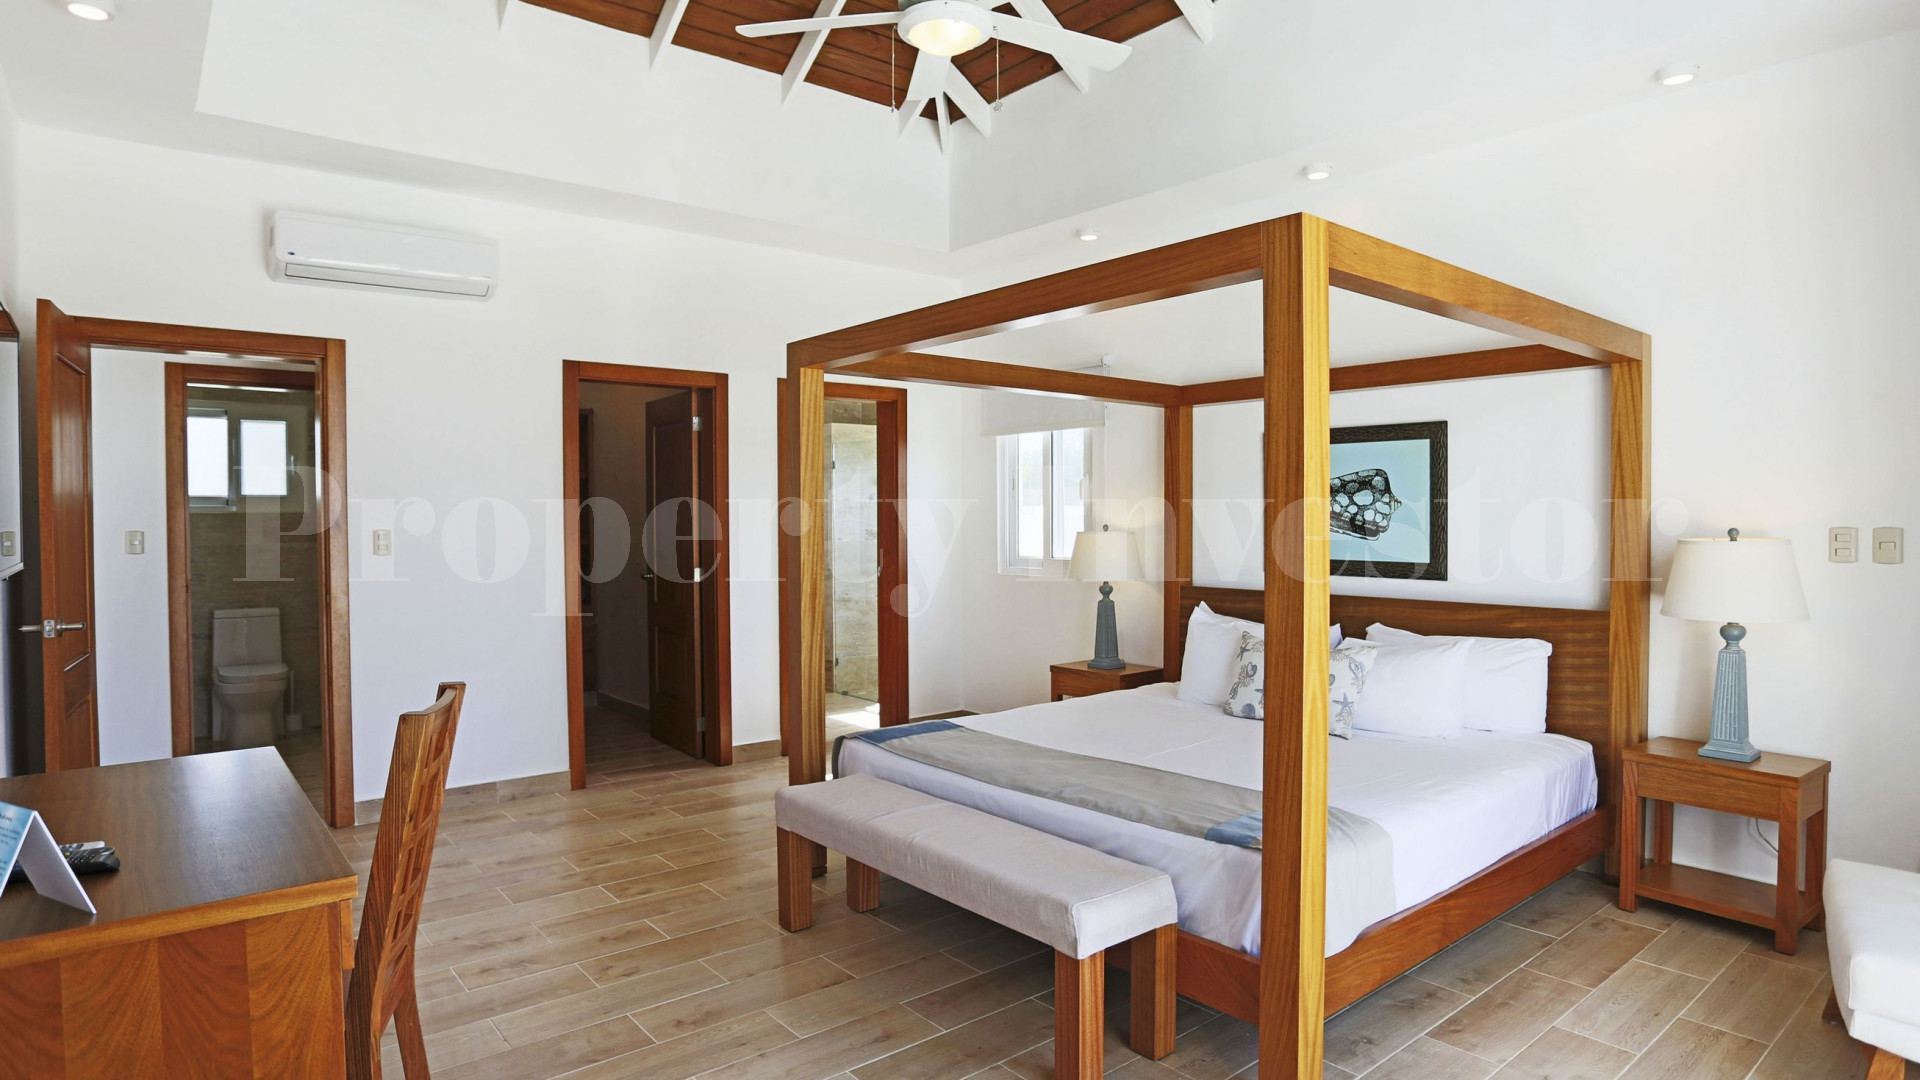 3 Bedroom Oceanview Villa in the Dominican Republic with 30 Year Financing (Villa 15)